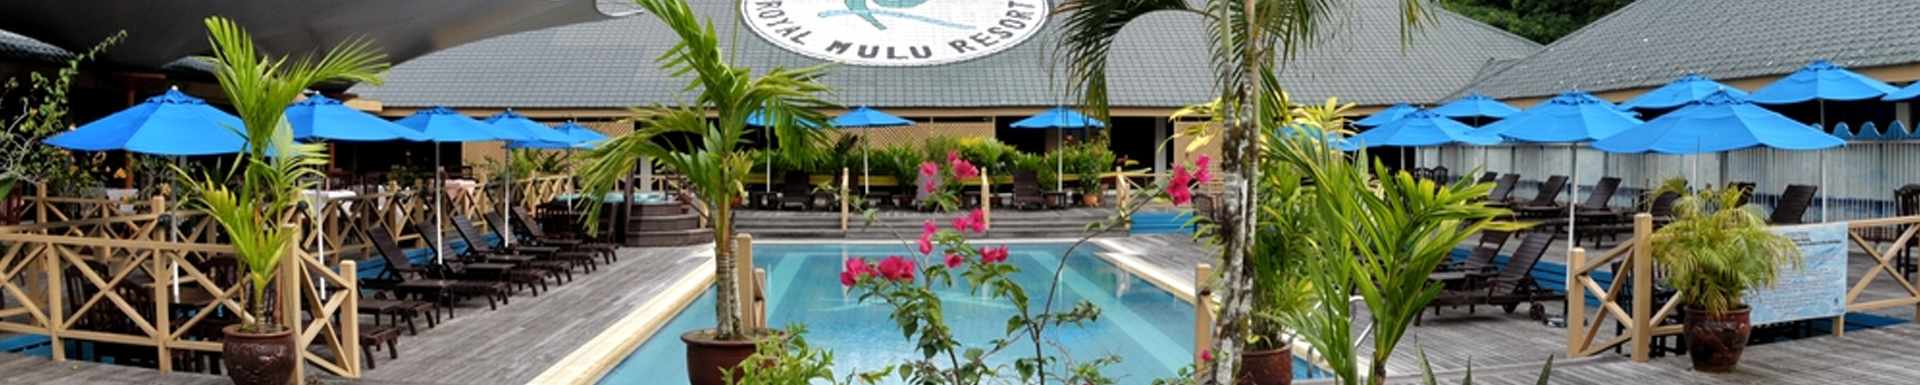 Club Asia International - Royal Mulu Resort